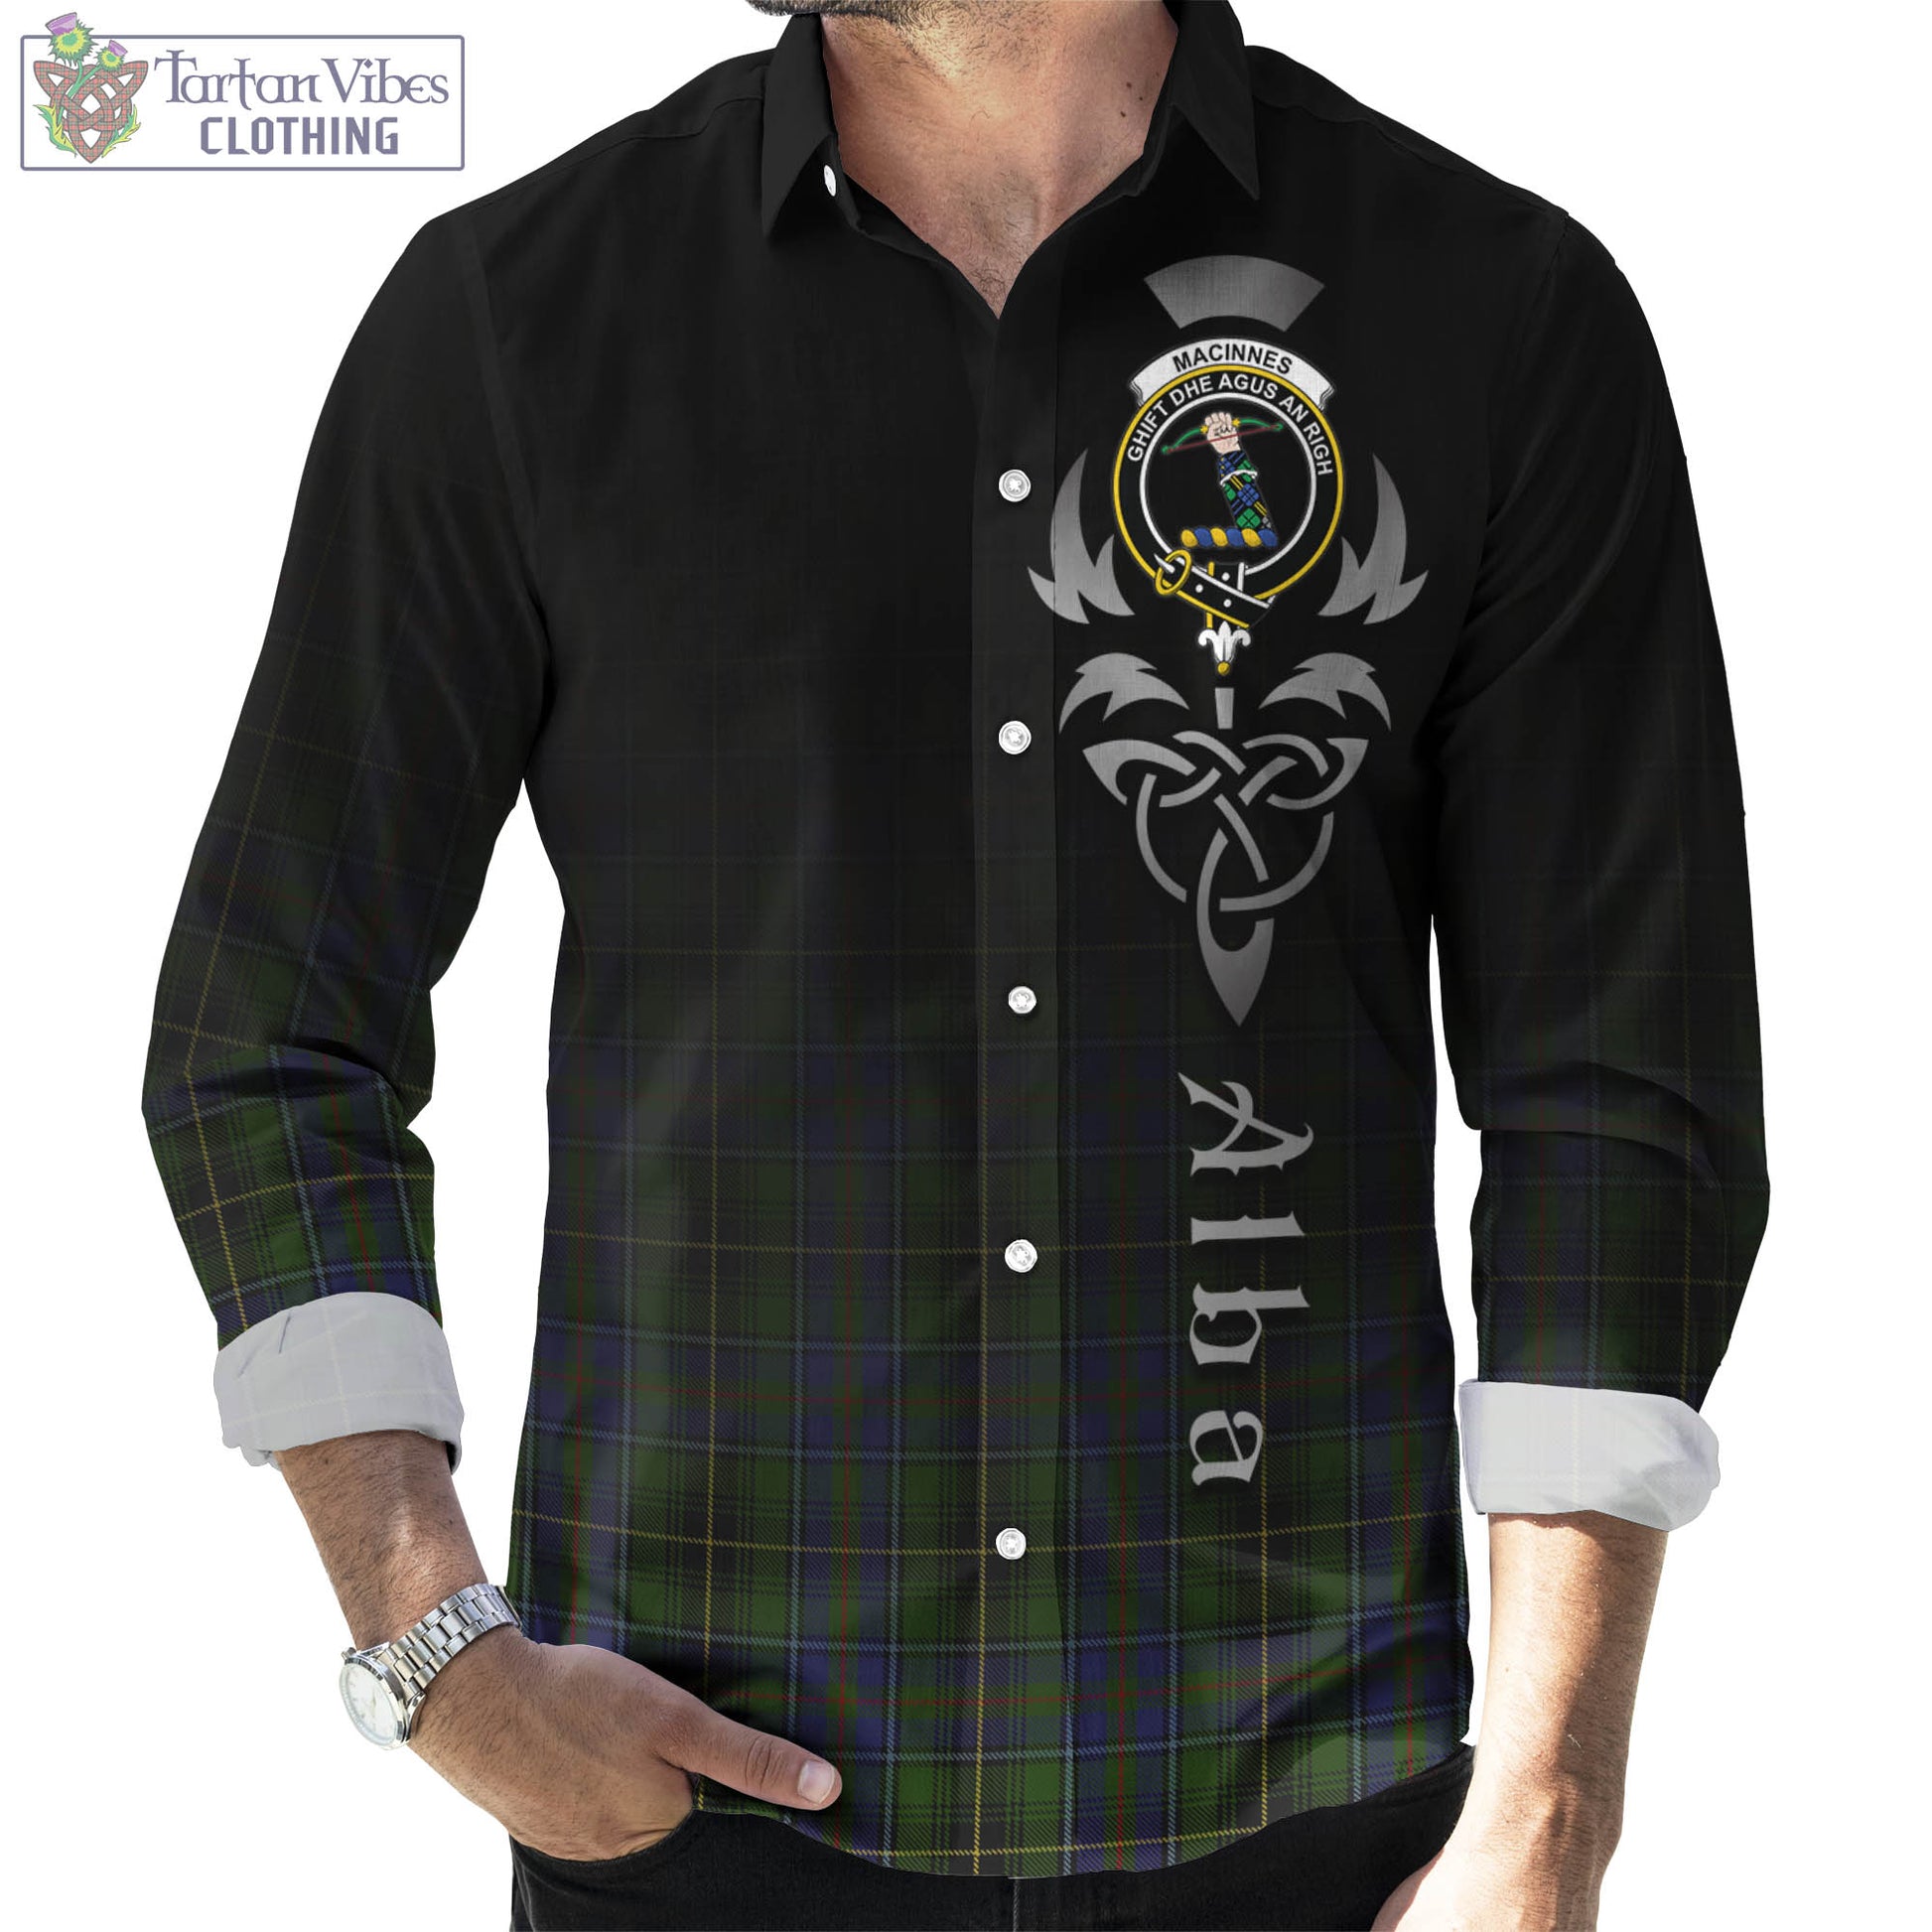 Tartan Vibes Clothing MacInnes Tartan Long Sleeve Button Up Featuring Alba Gu Brath Family Crest Celtic Inspired